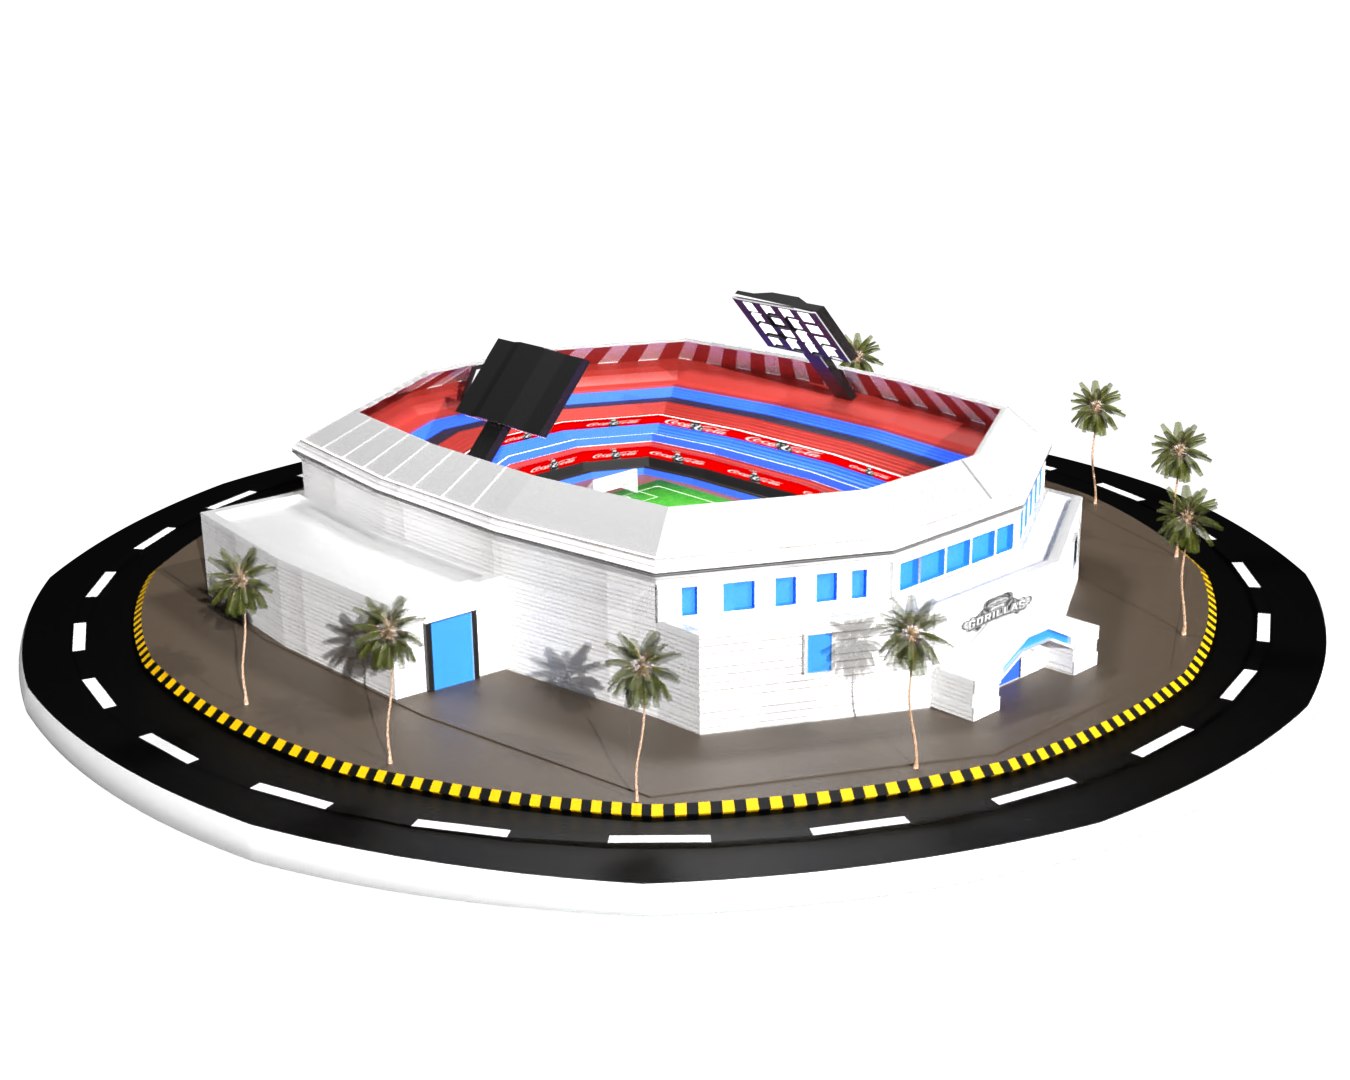 3D Printed Soccer Stadium